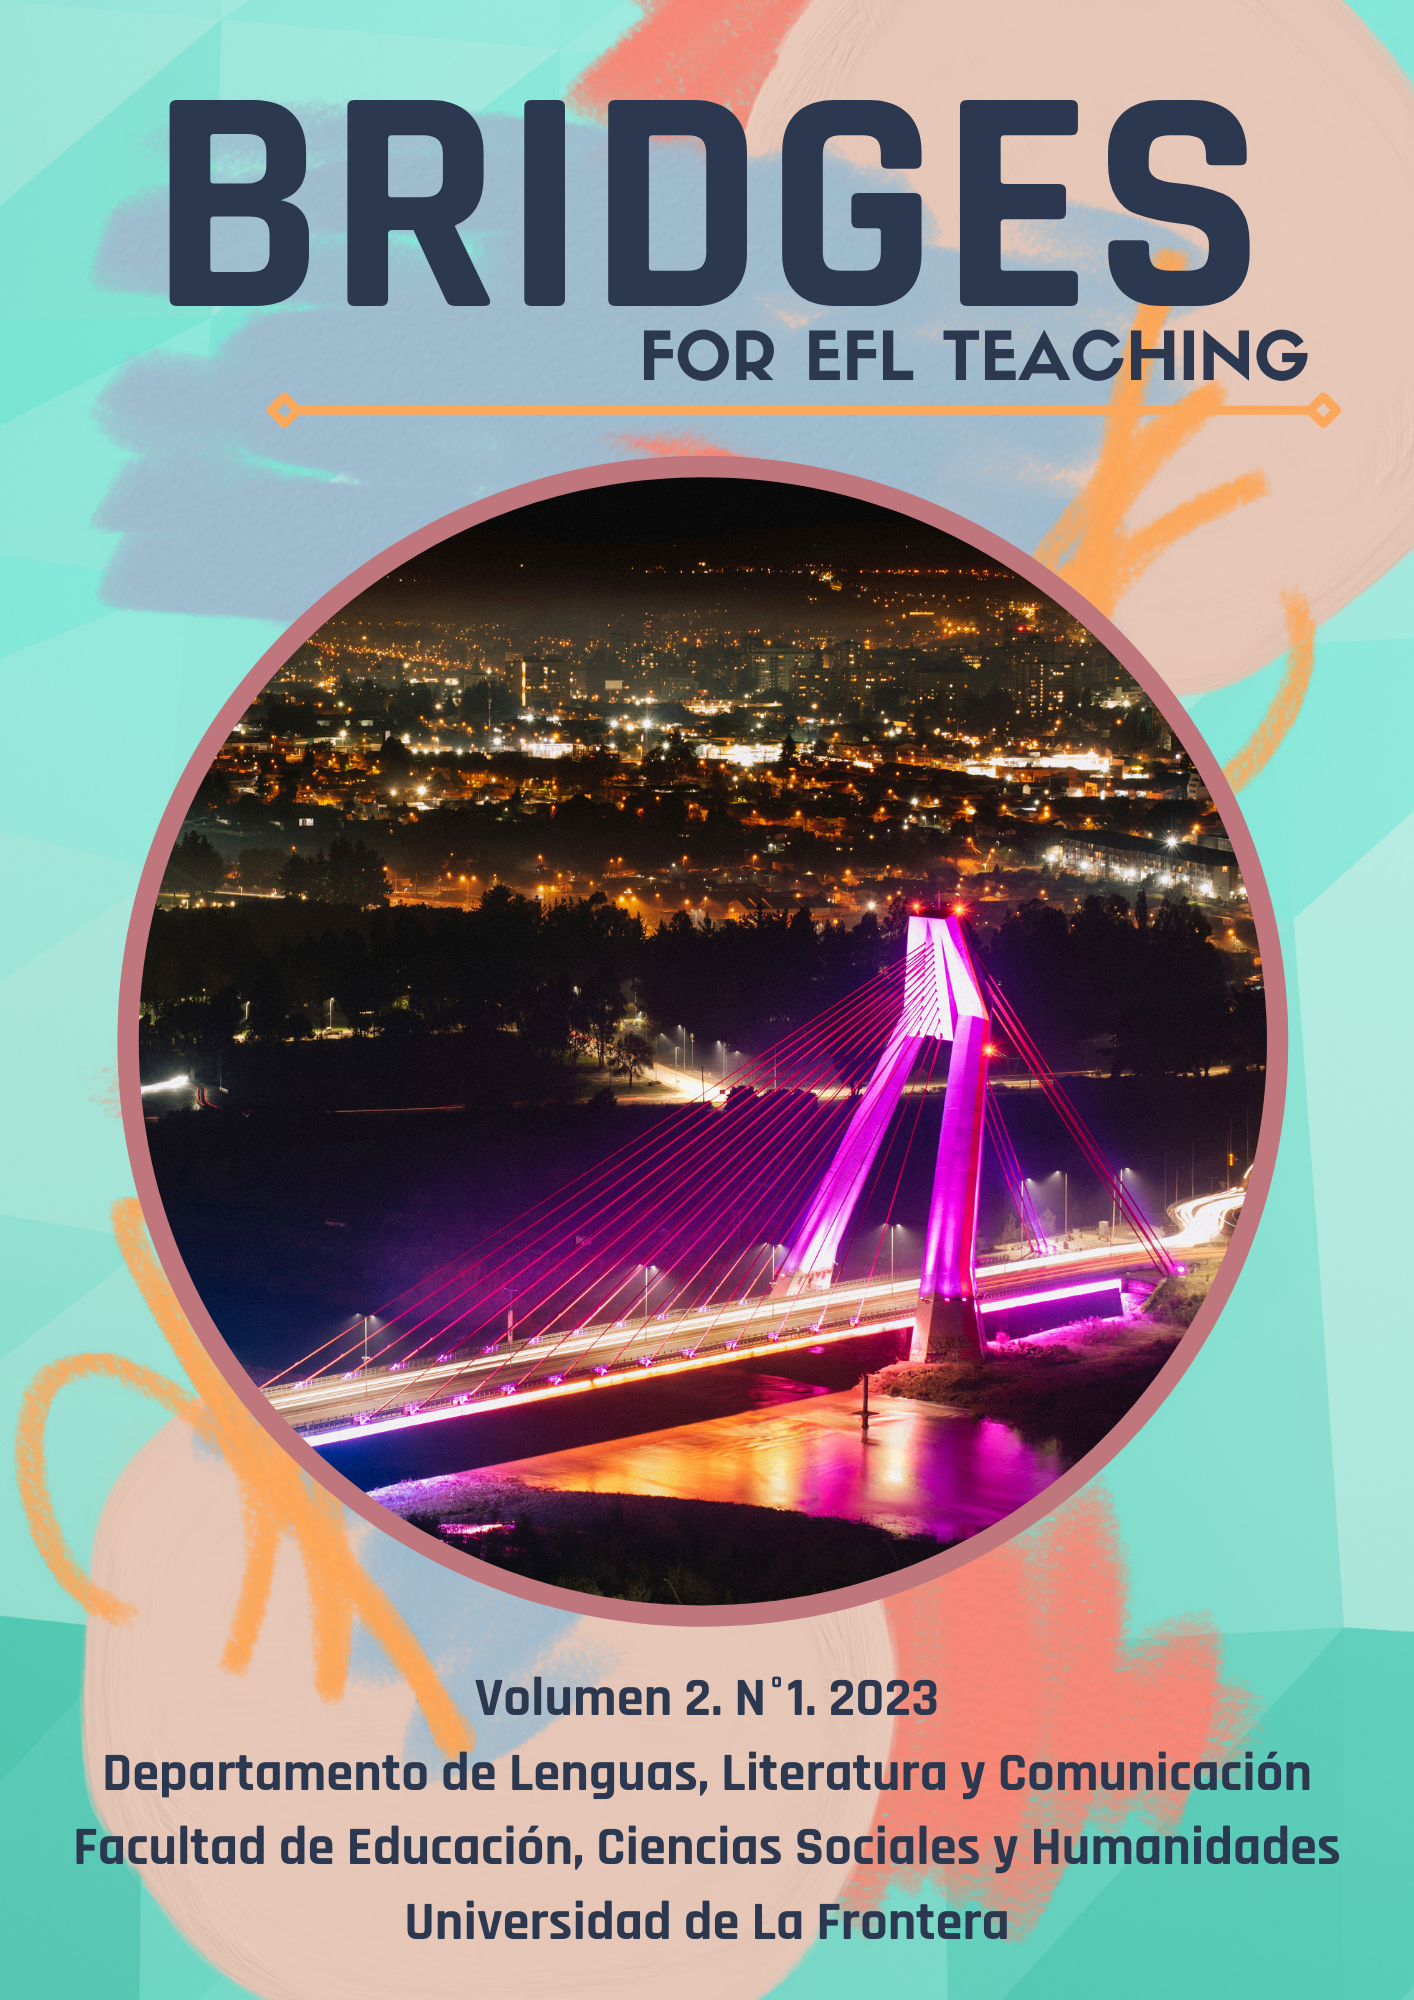 Vol.2 N°1 (2023): Bridges for EFL Teaching